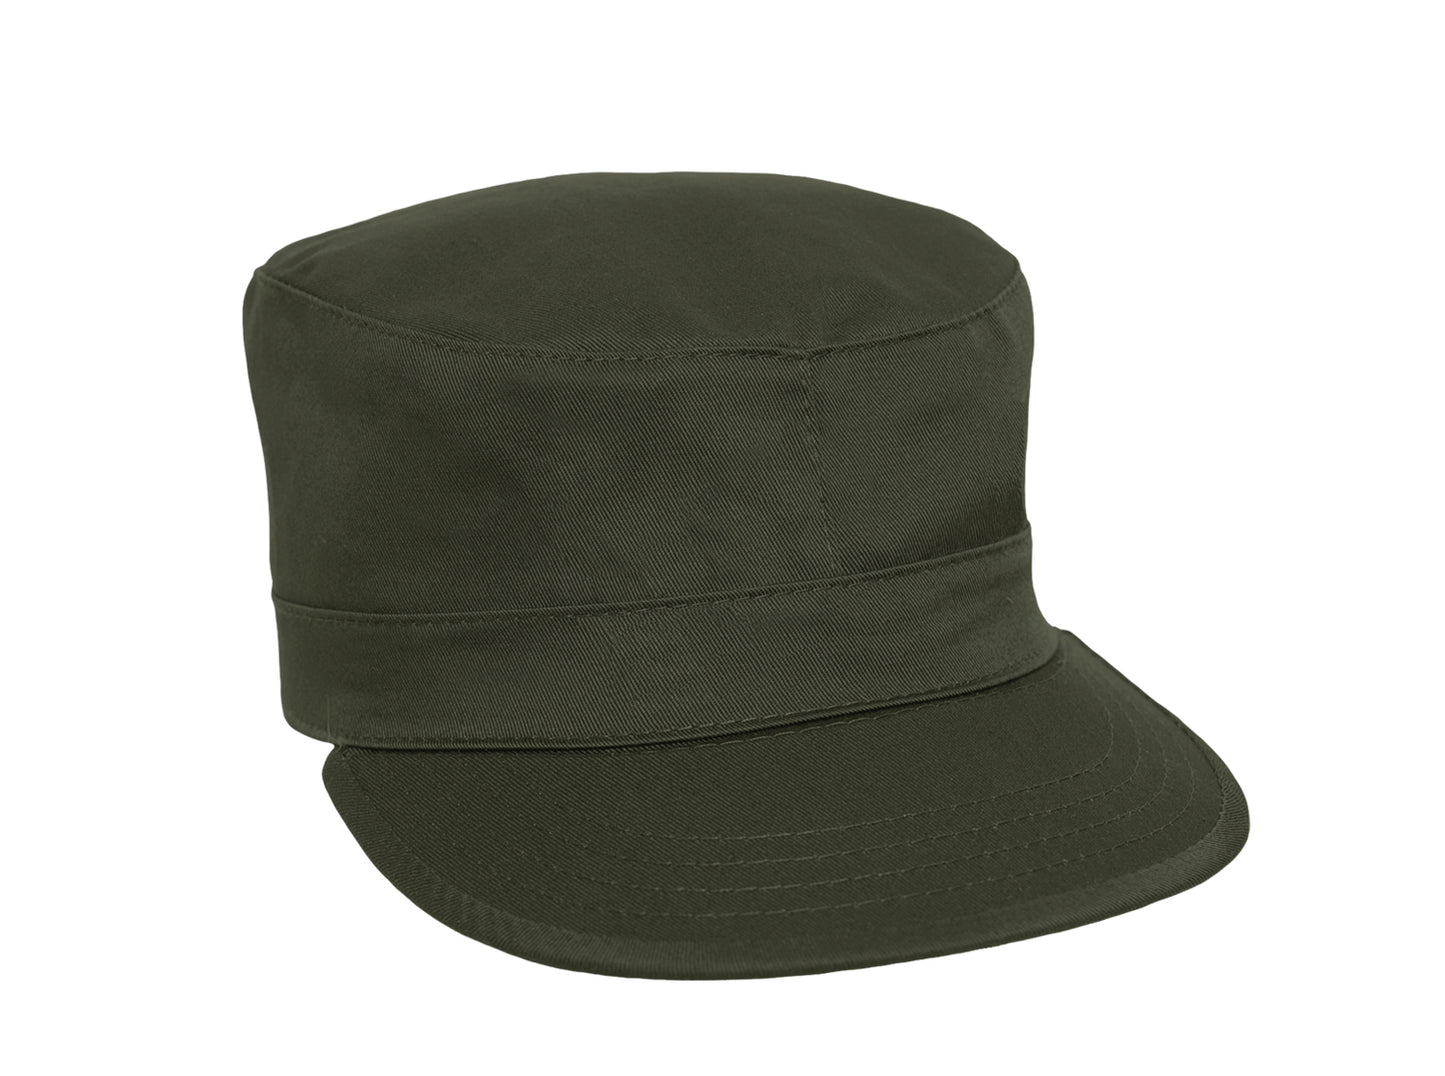 Rothco Fatigue Caps Military BDU Uniform Hat